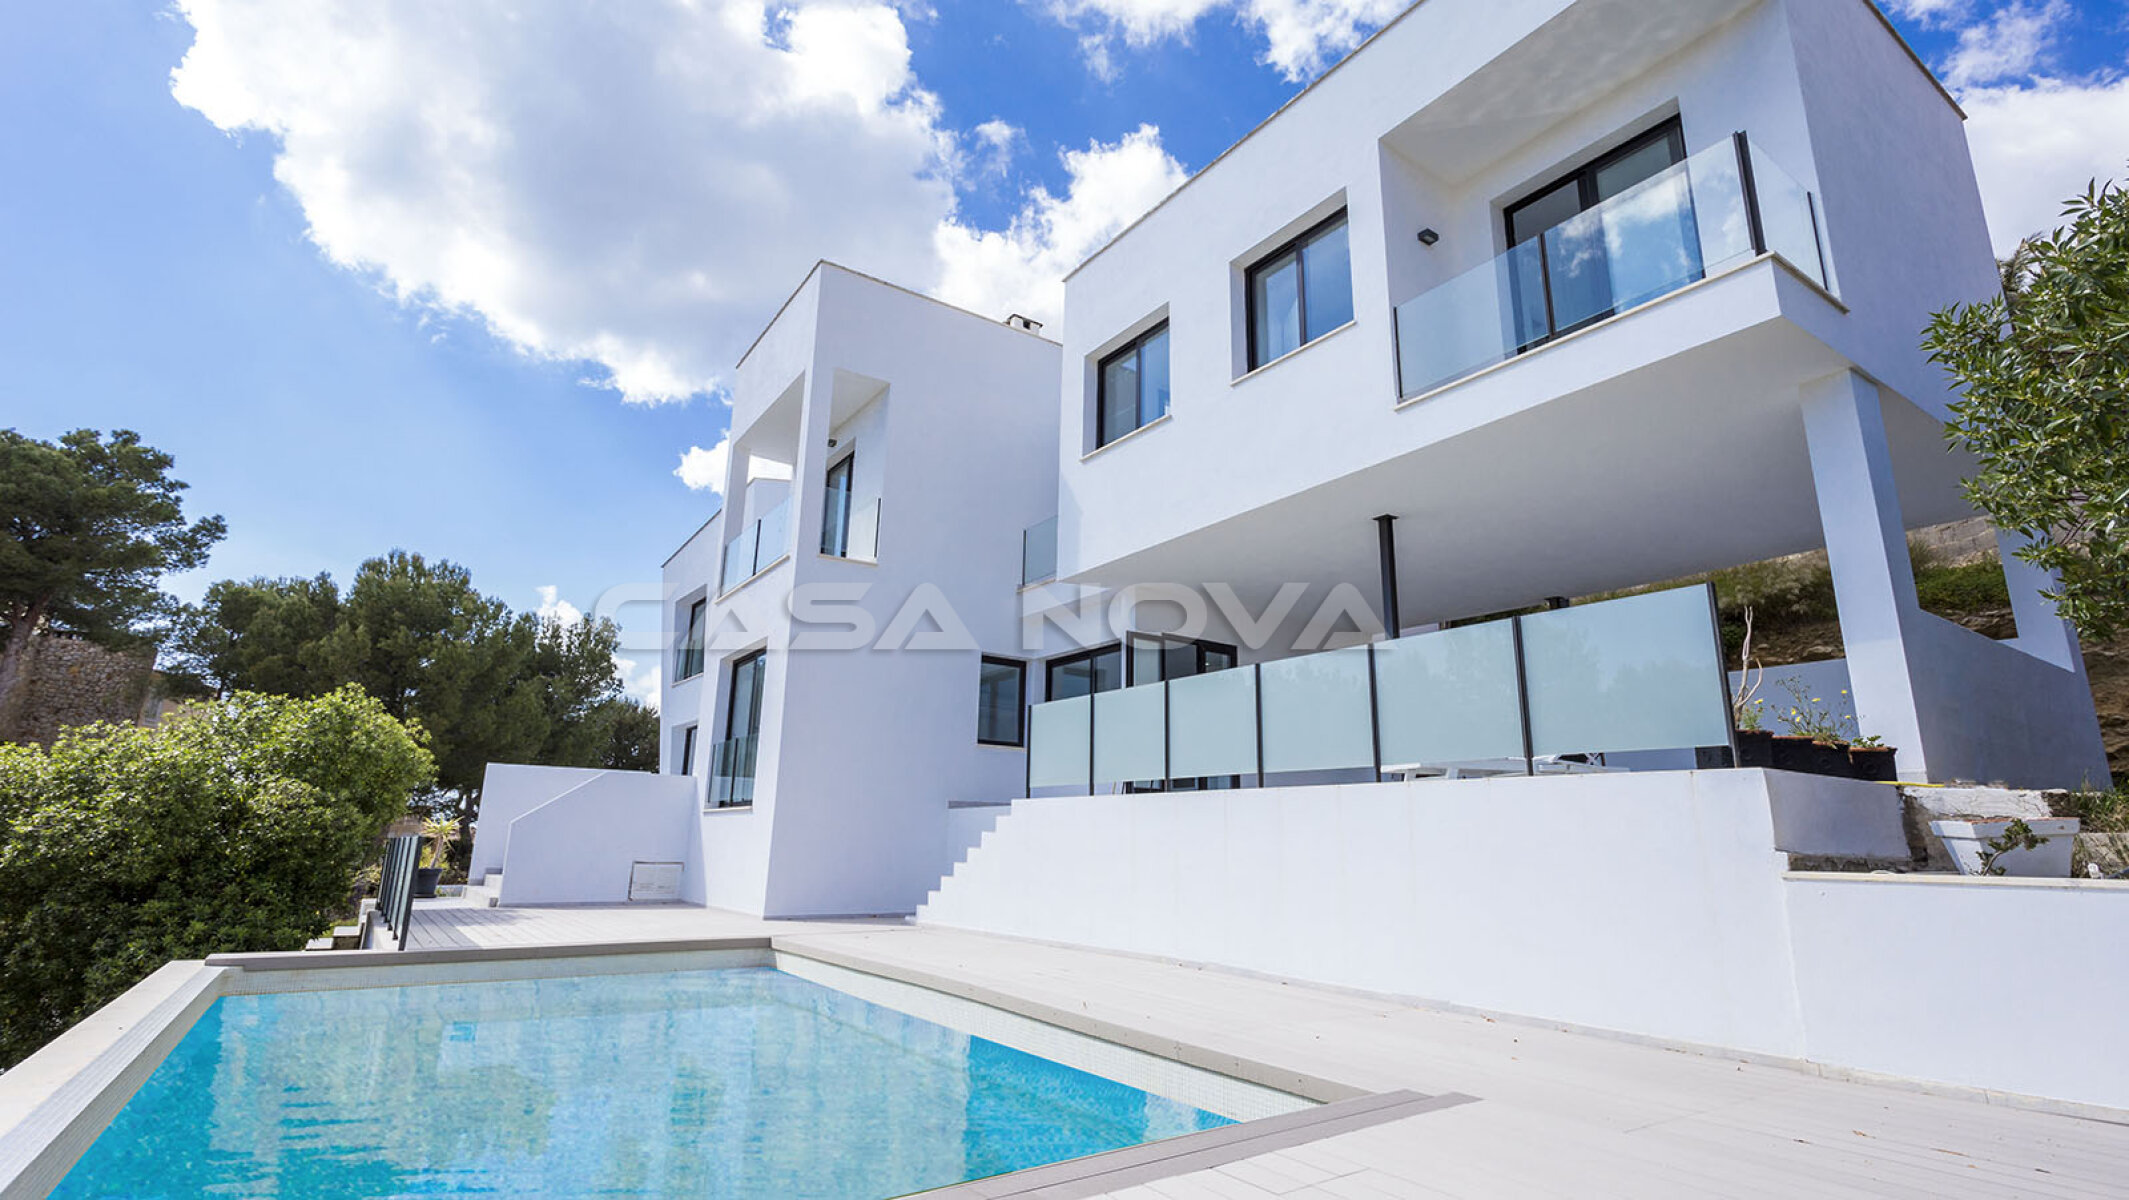 Immobilien Mallorca : Moderne Villa in beliebter S�dlage 